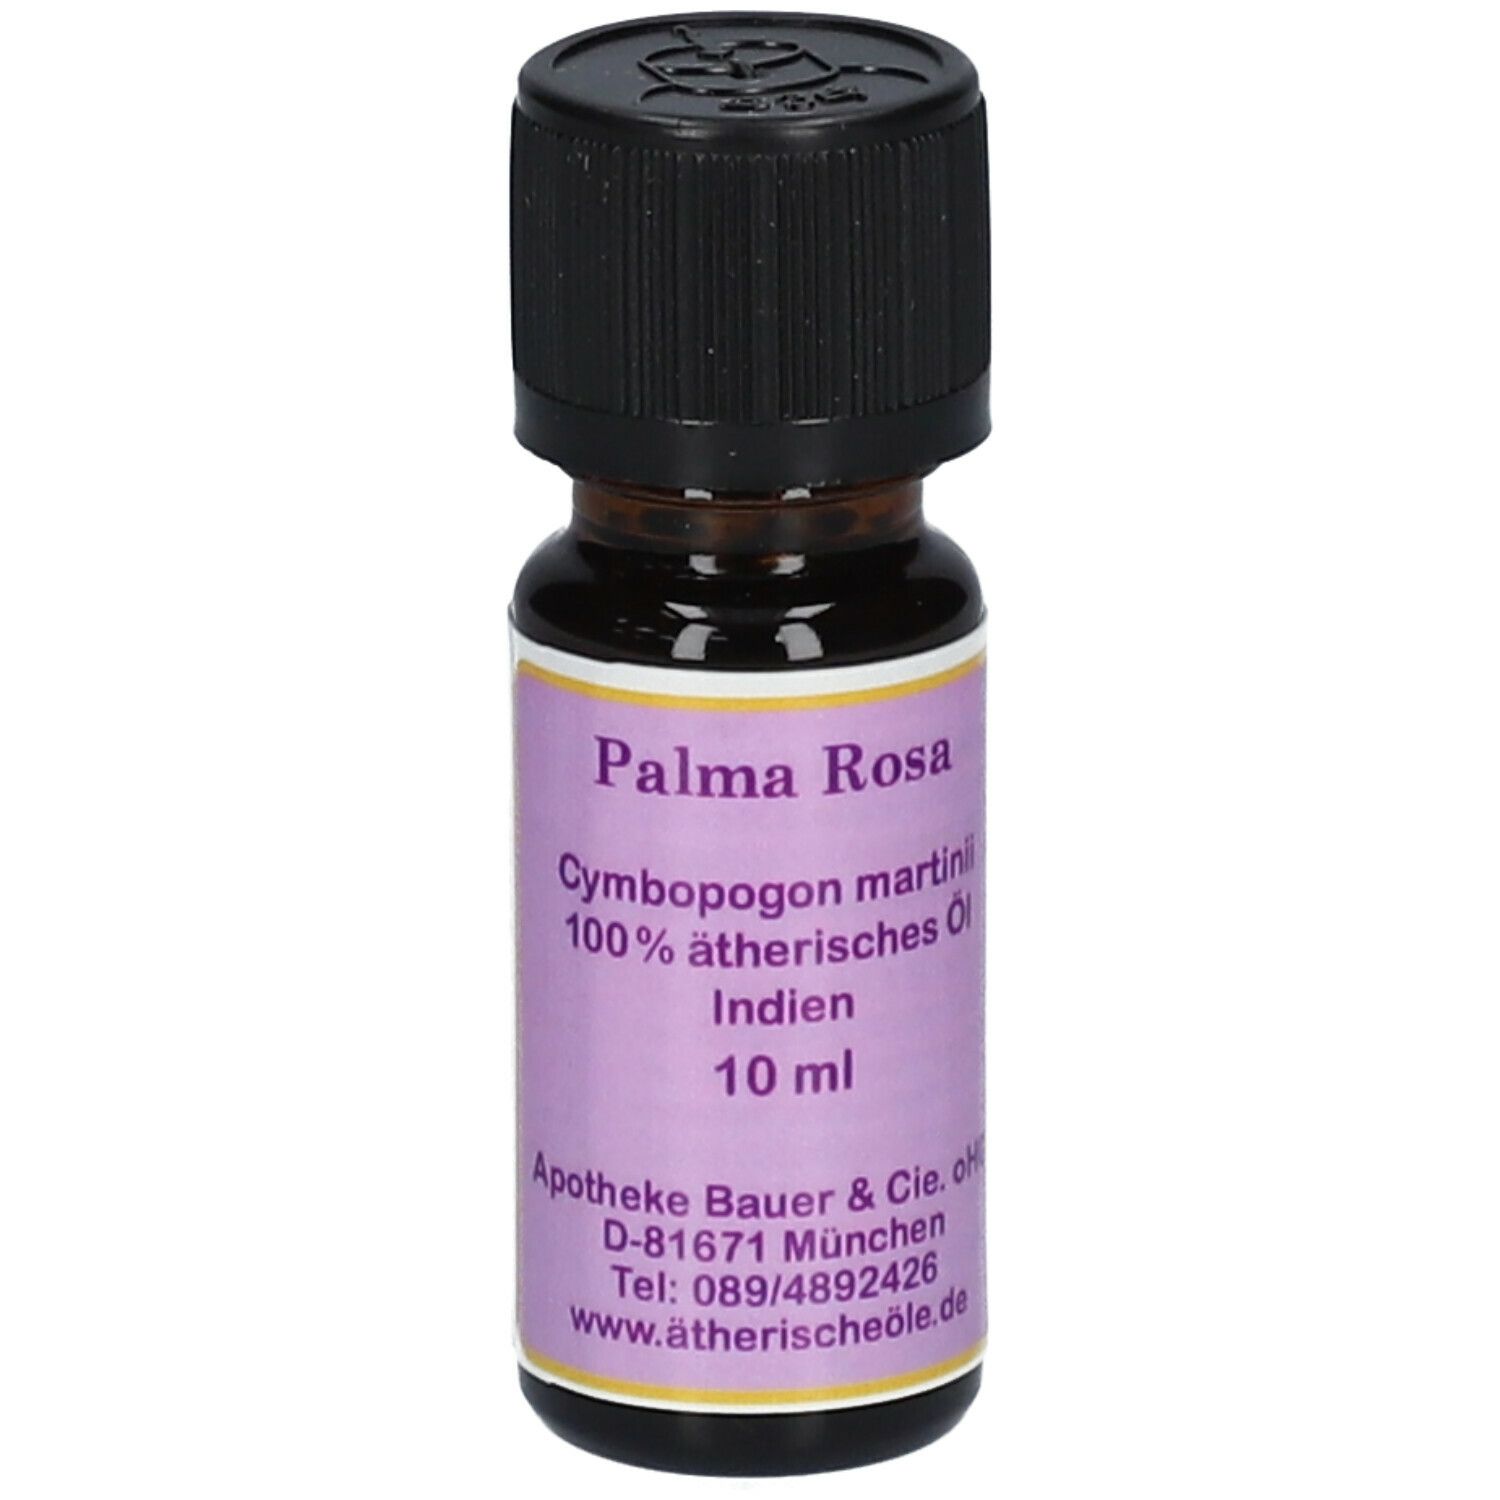 Palma Rosa 100% ätherisches Öl